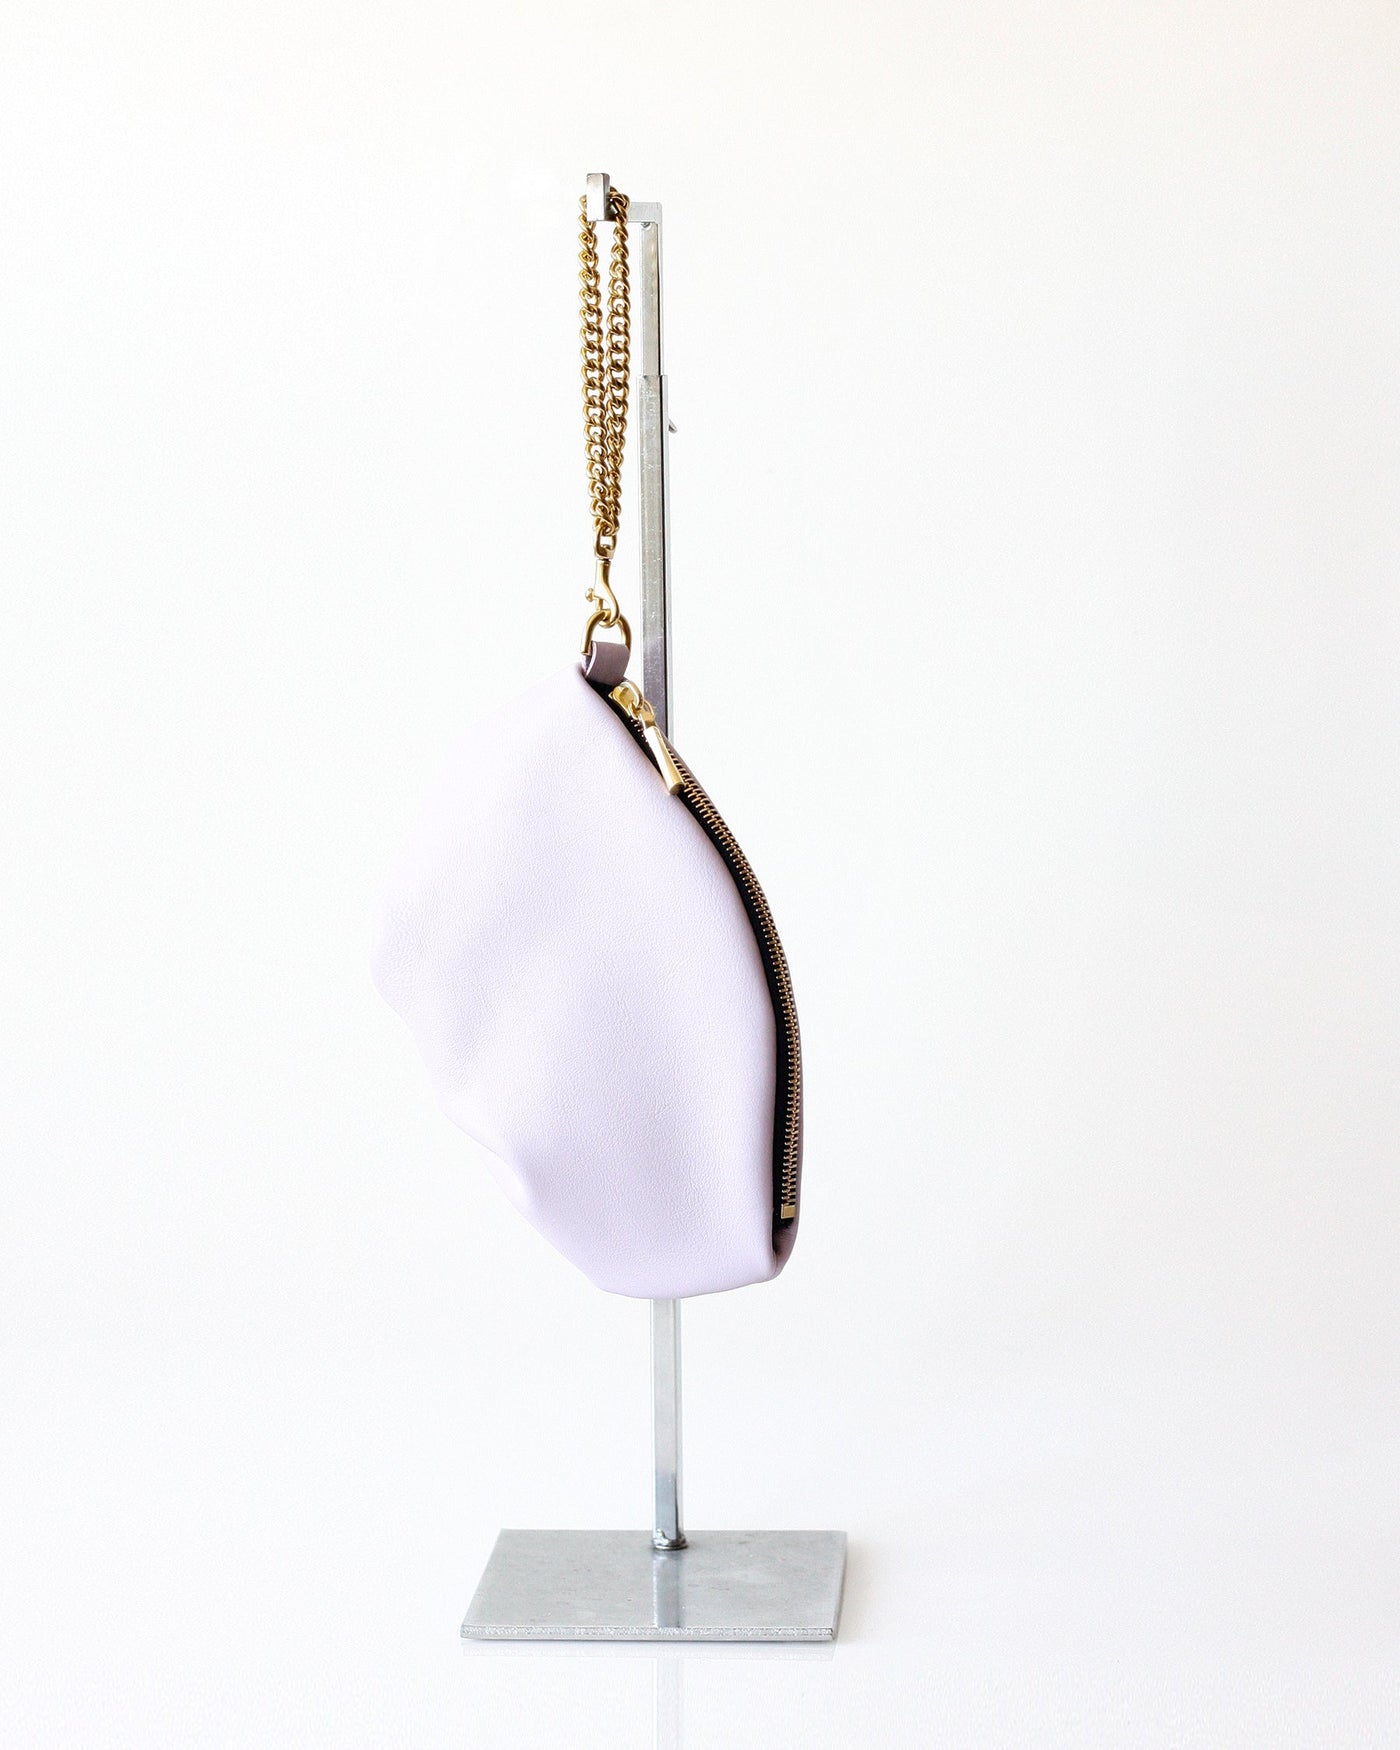 m Pochette | Lilas - OPELLE bag opelle handbag opellecreative